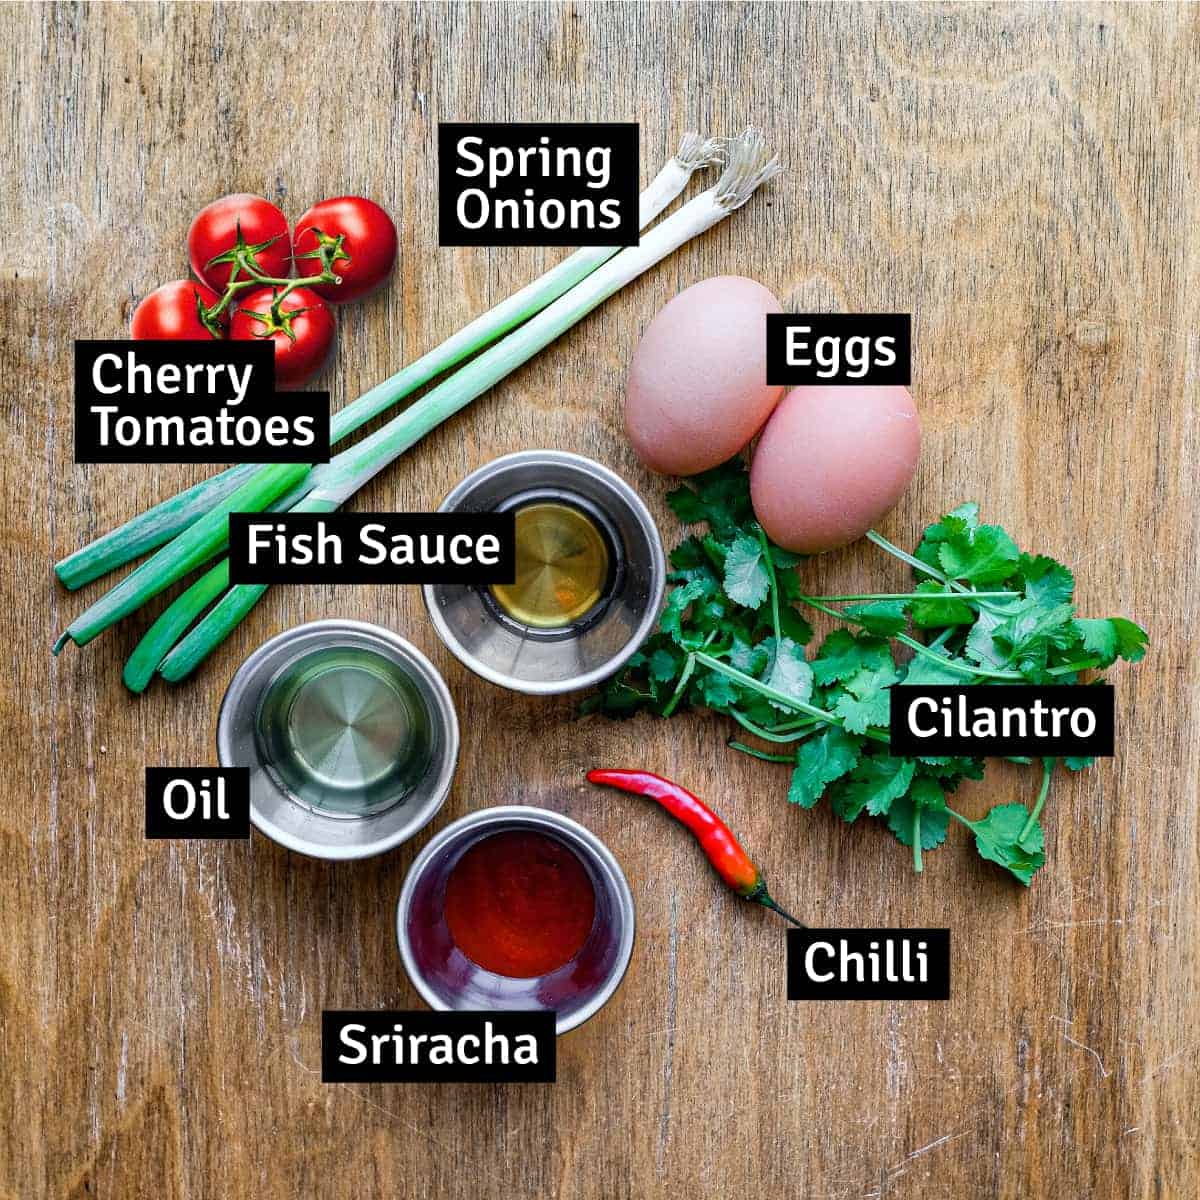 The ingredients for bulgur pilav with lamb and kale: lamb, kale, onion, garlic, celery, tomato passata and cumin.